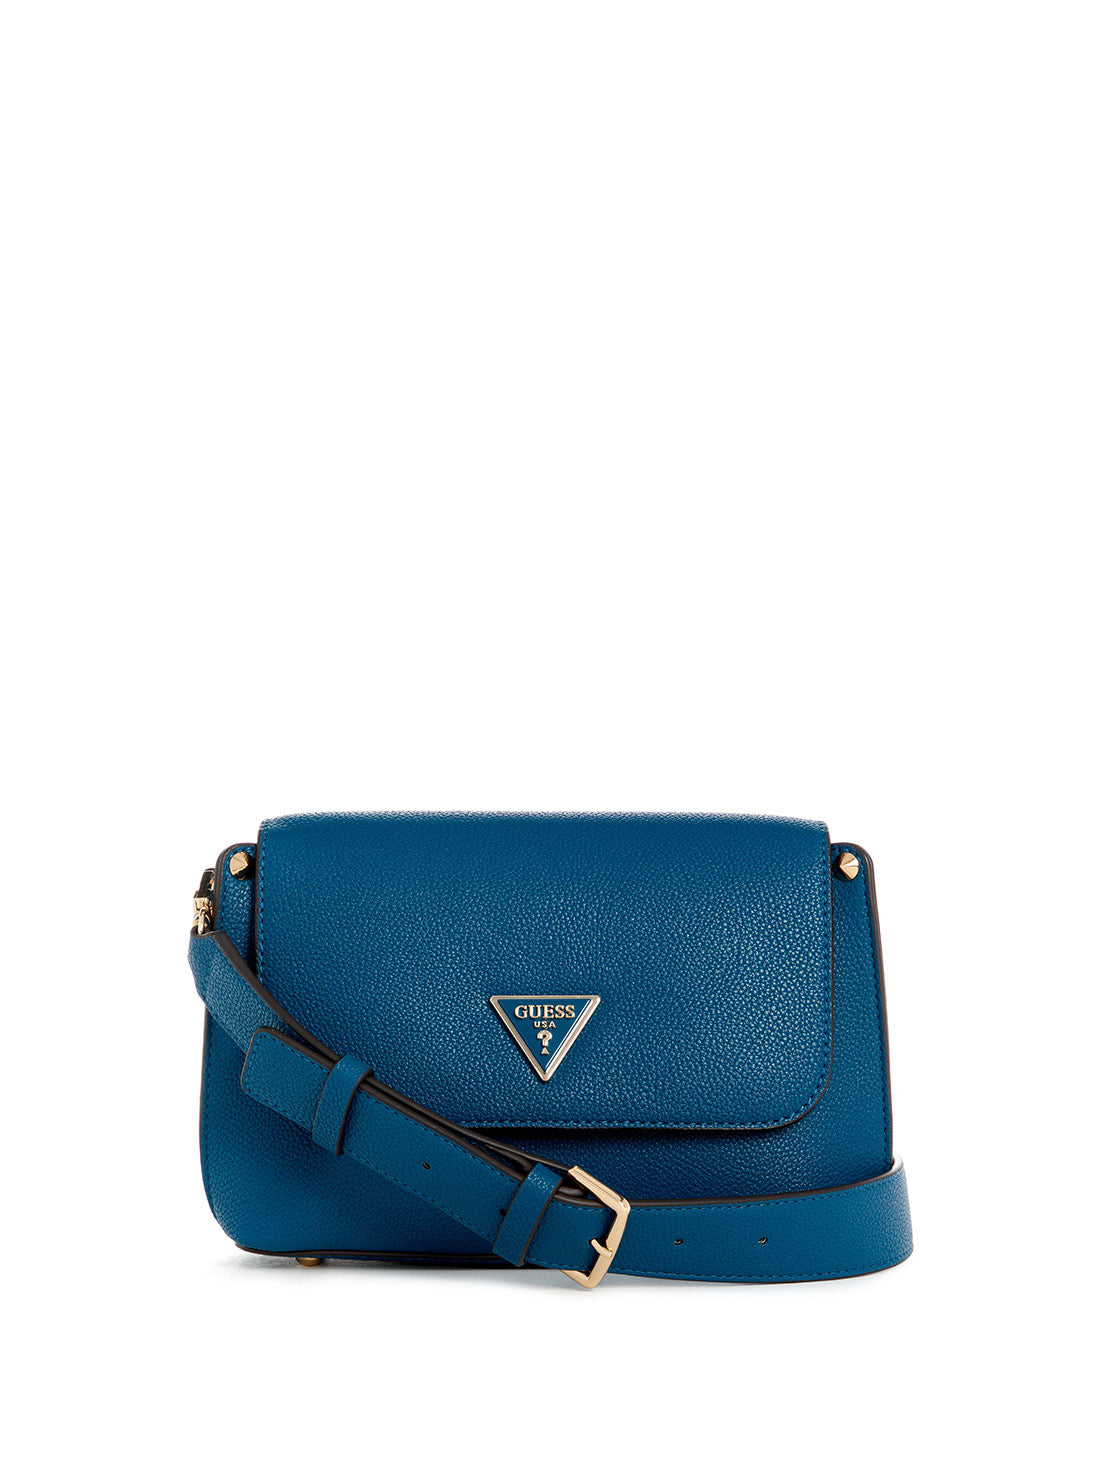 GUESS Blue Meridian Shoulder Bag front view